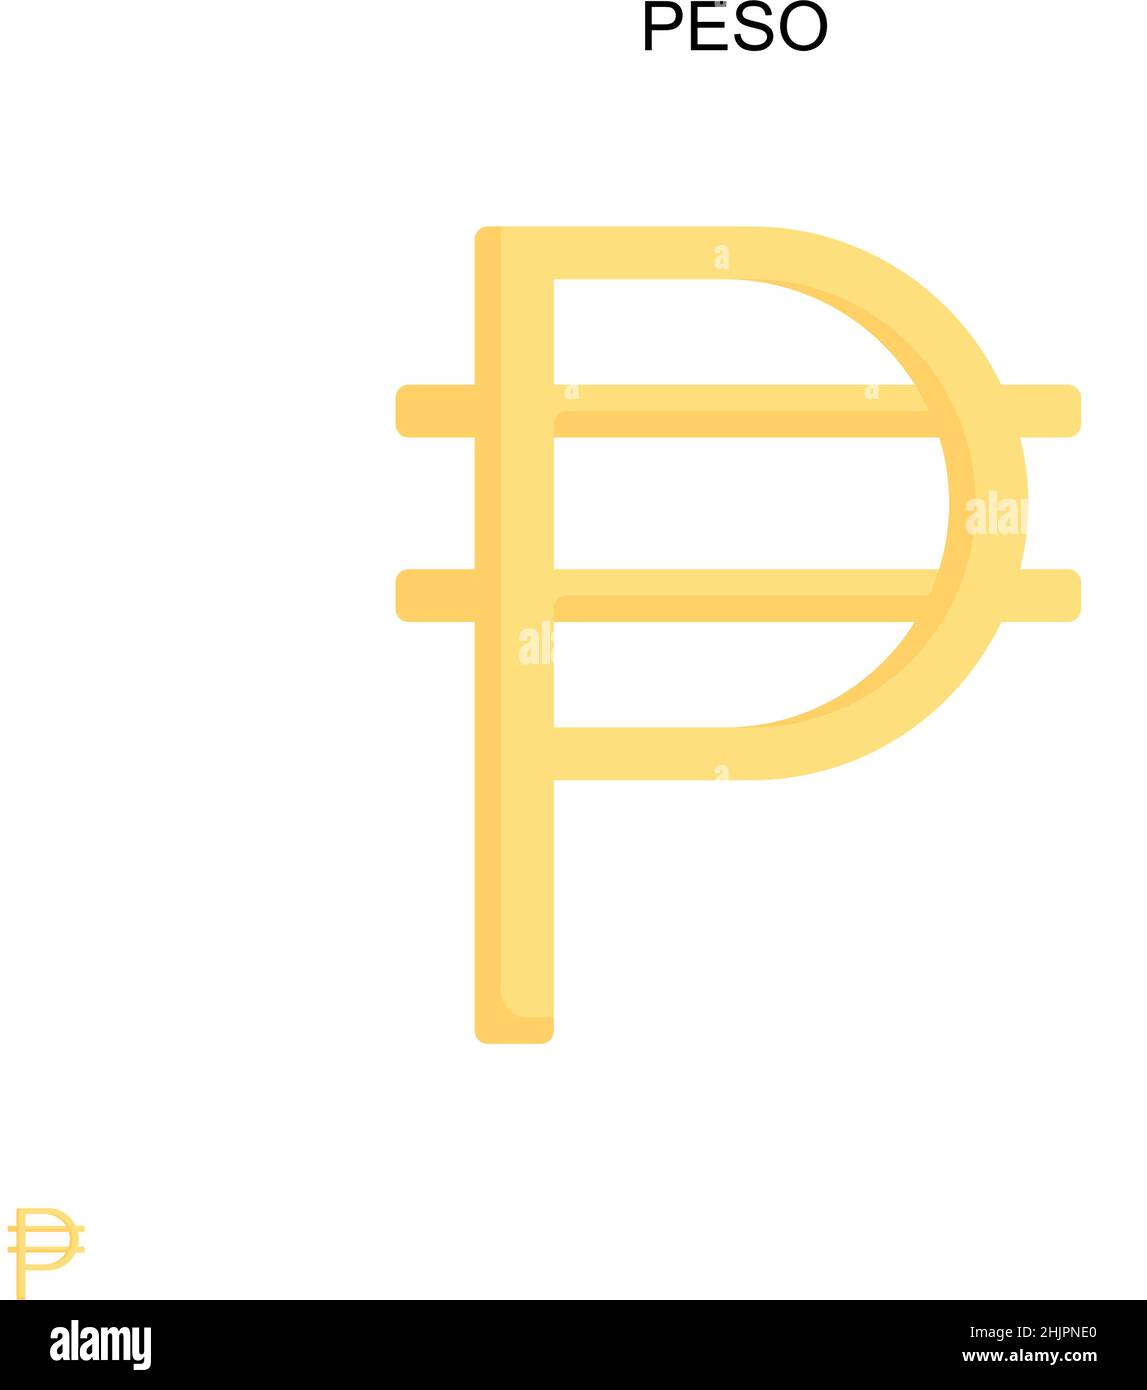 Peso Simple vector icon. Illustration symbol design template for web mobile UI element. Stock Vector